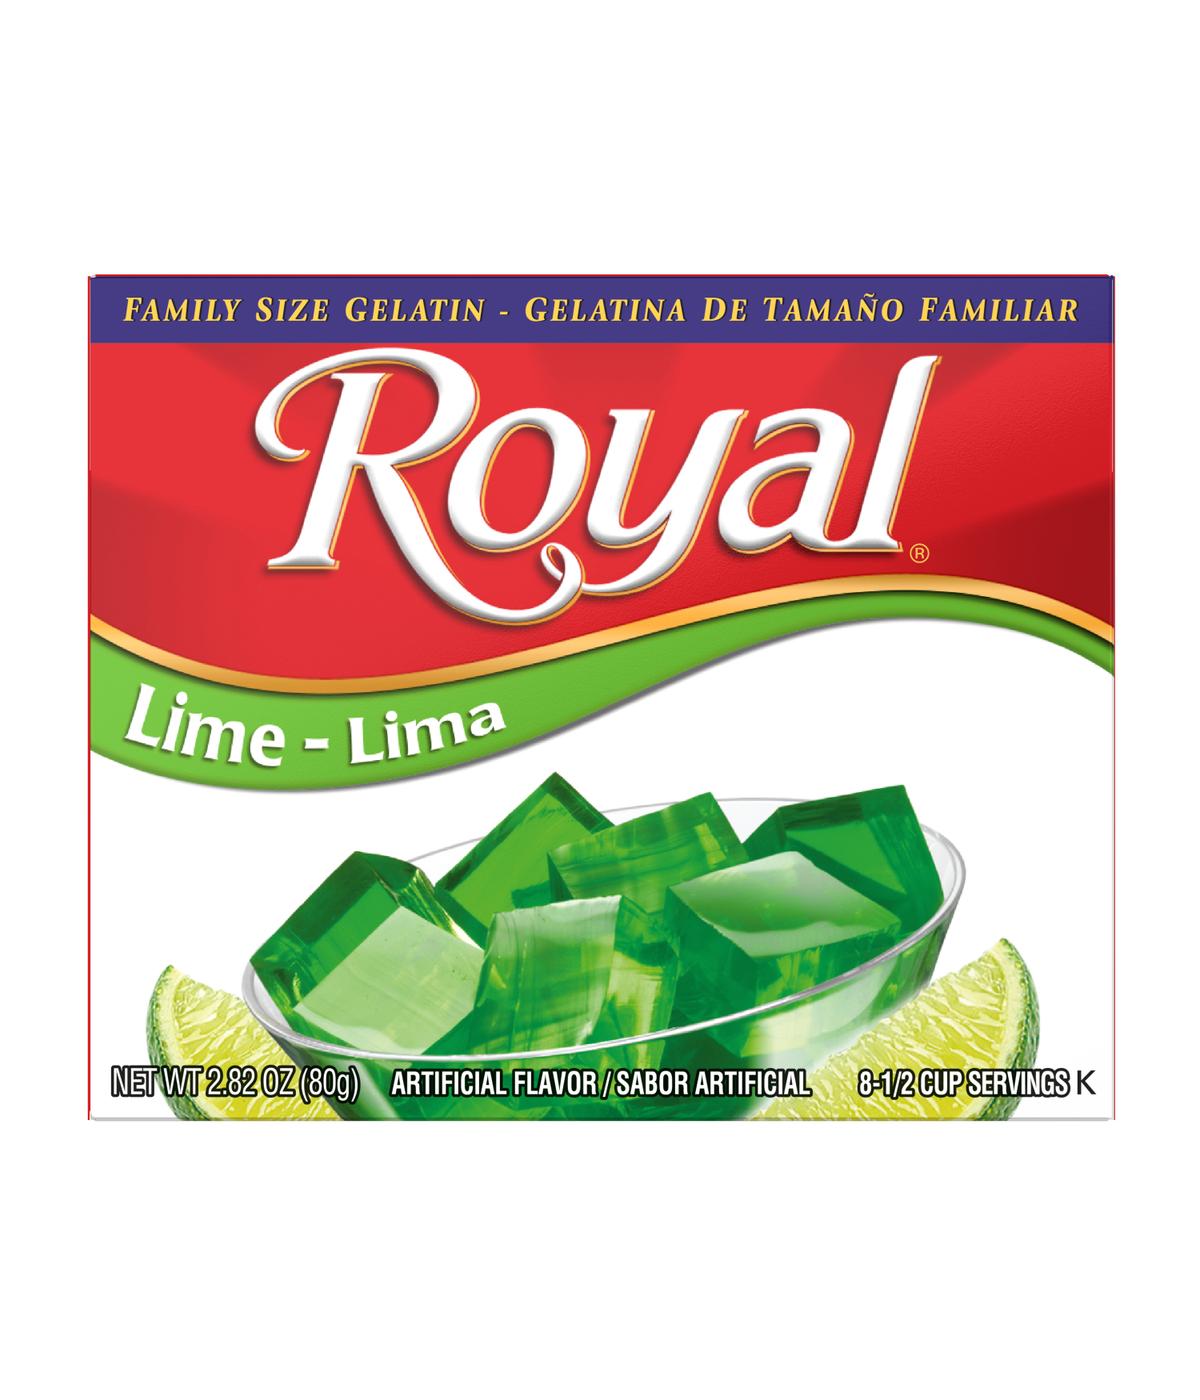 Royal Gelatin - Family Size Lime; image 1 of 4